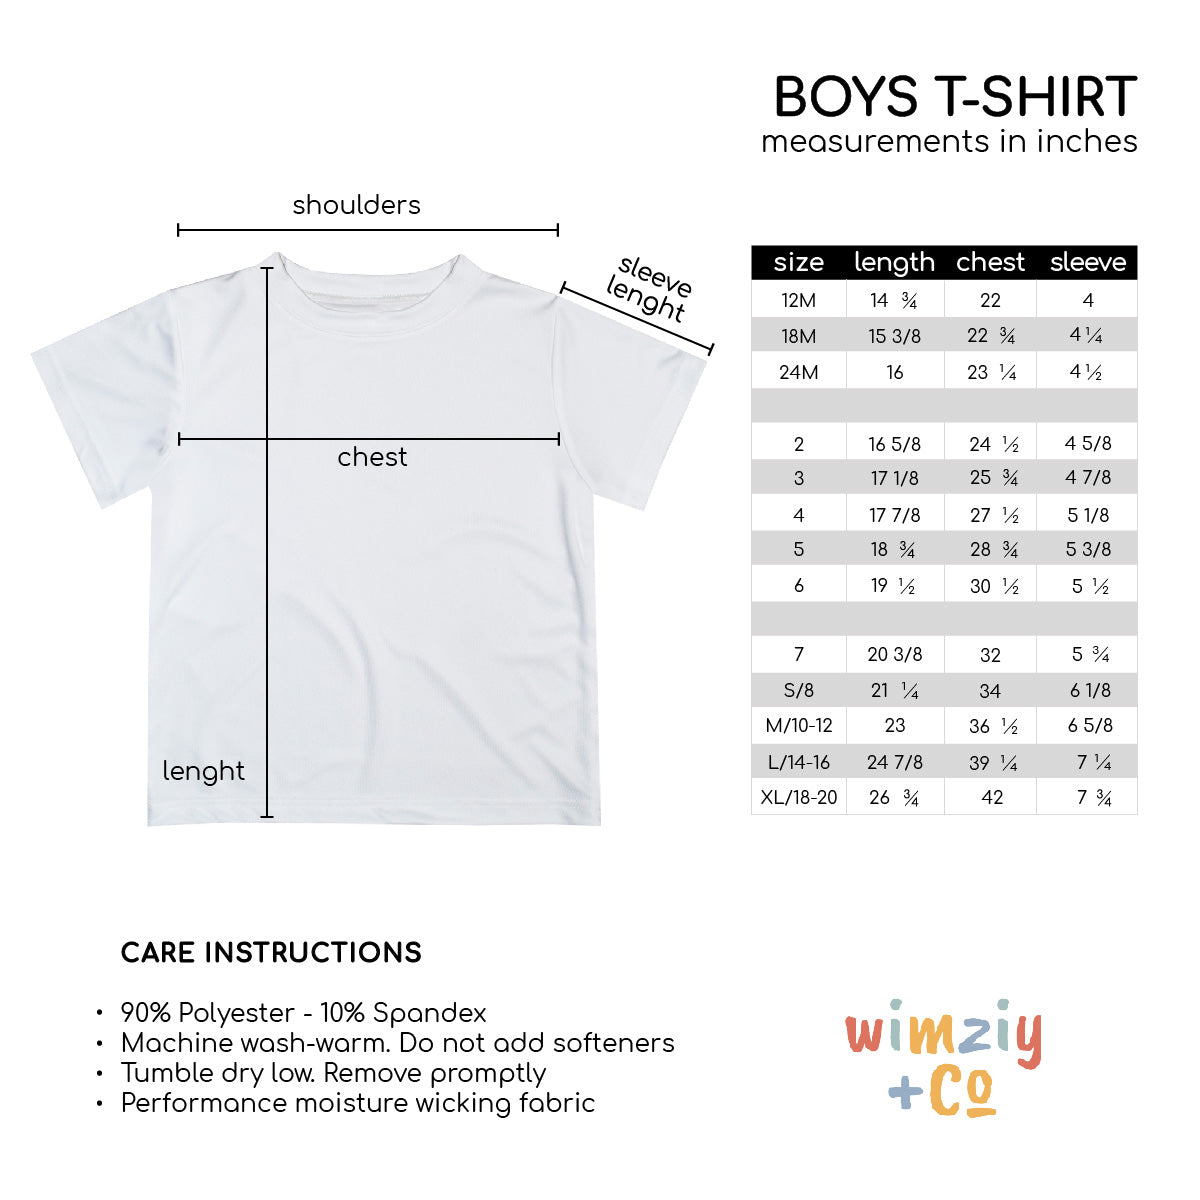 Gorilla Black and White Short Sleeve Boys Tee Shirt - Wimziy&Co.